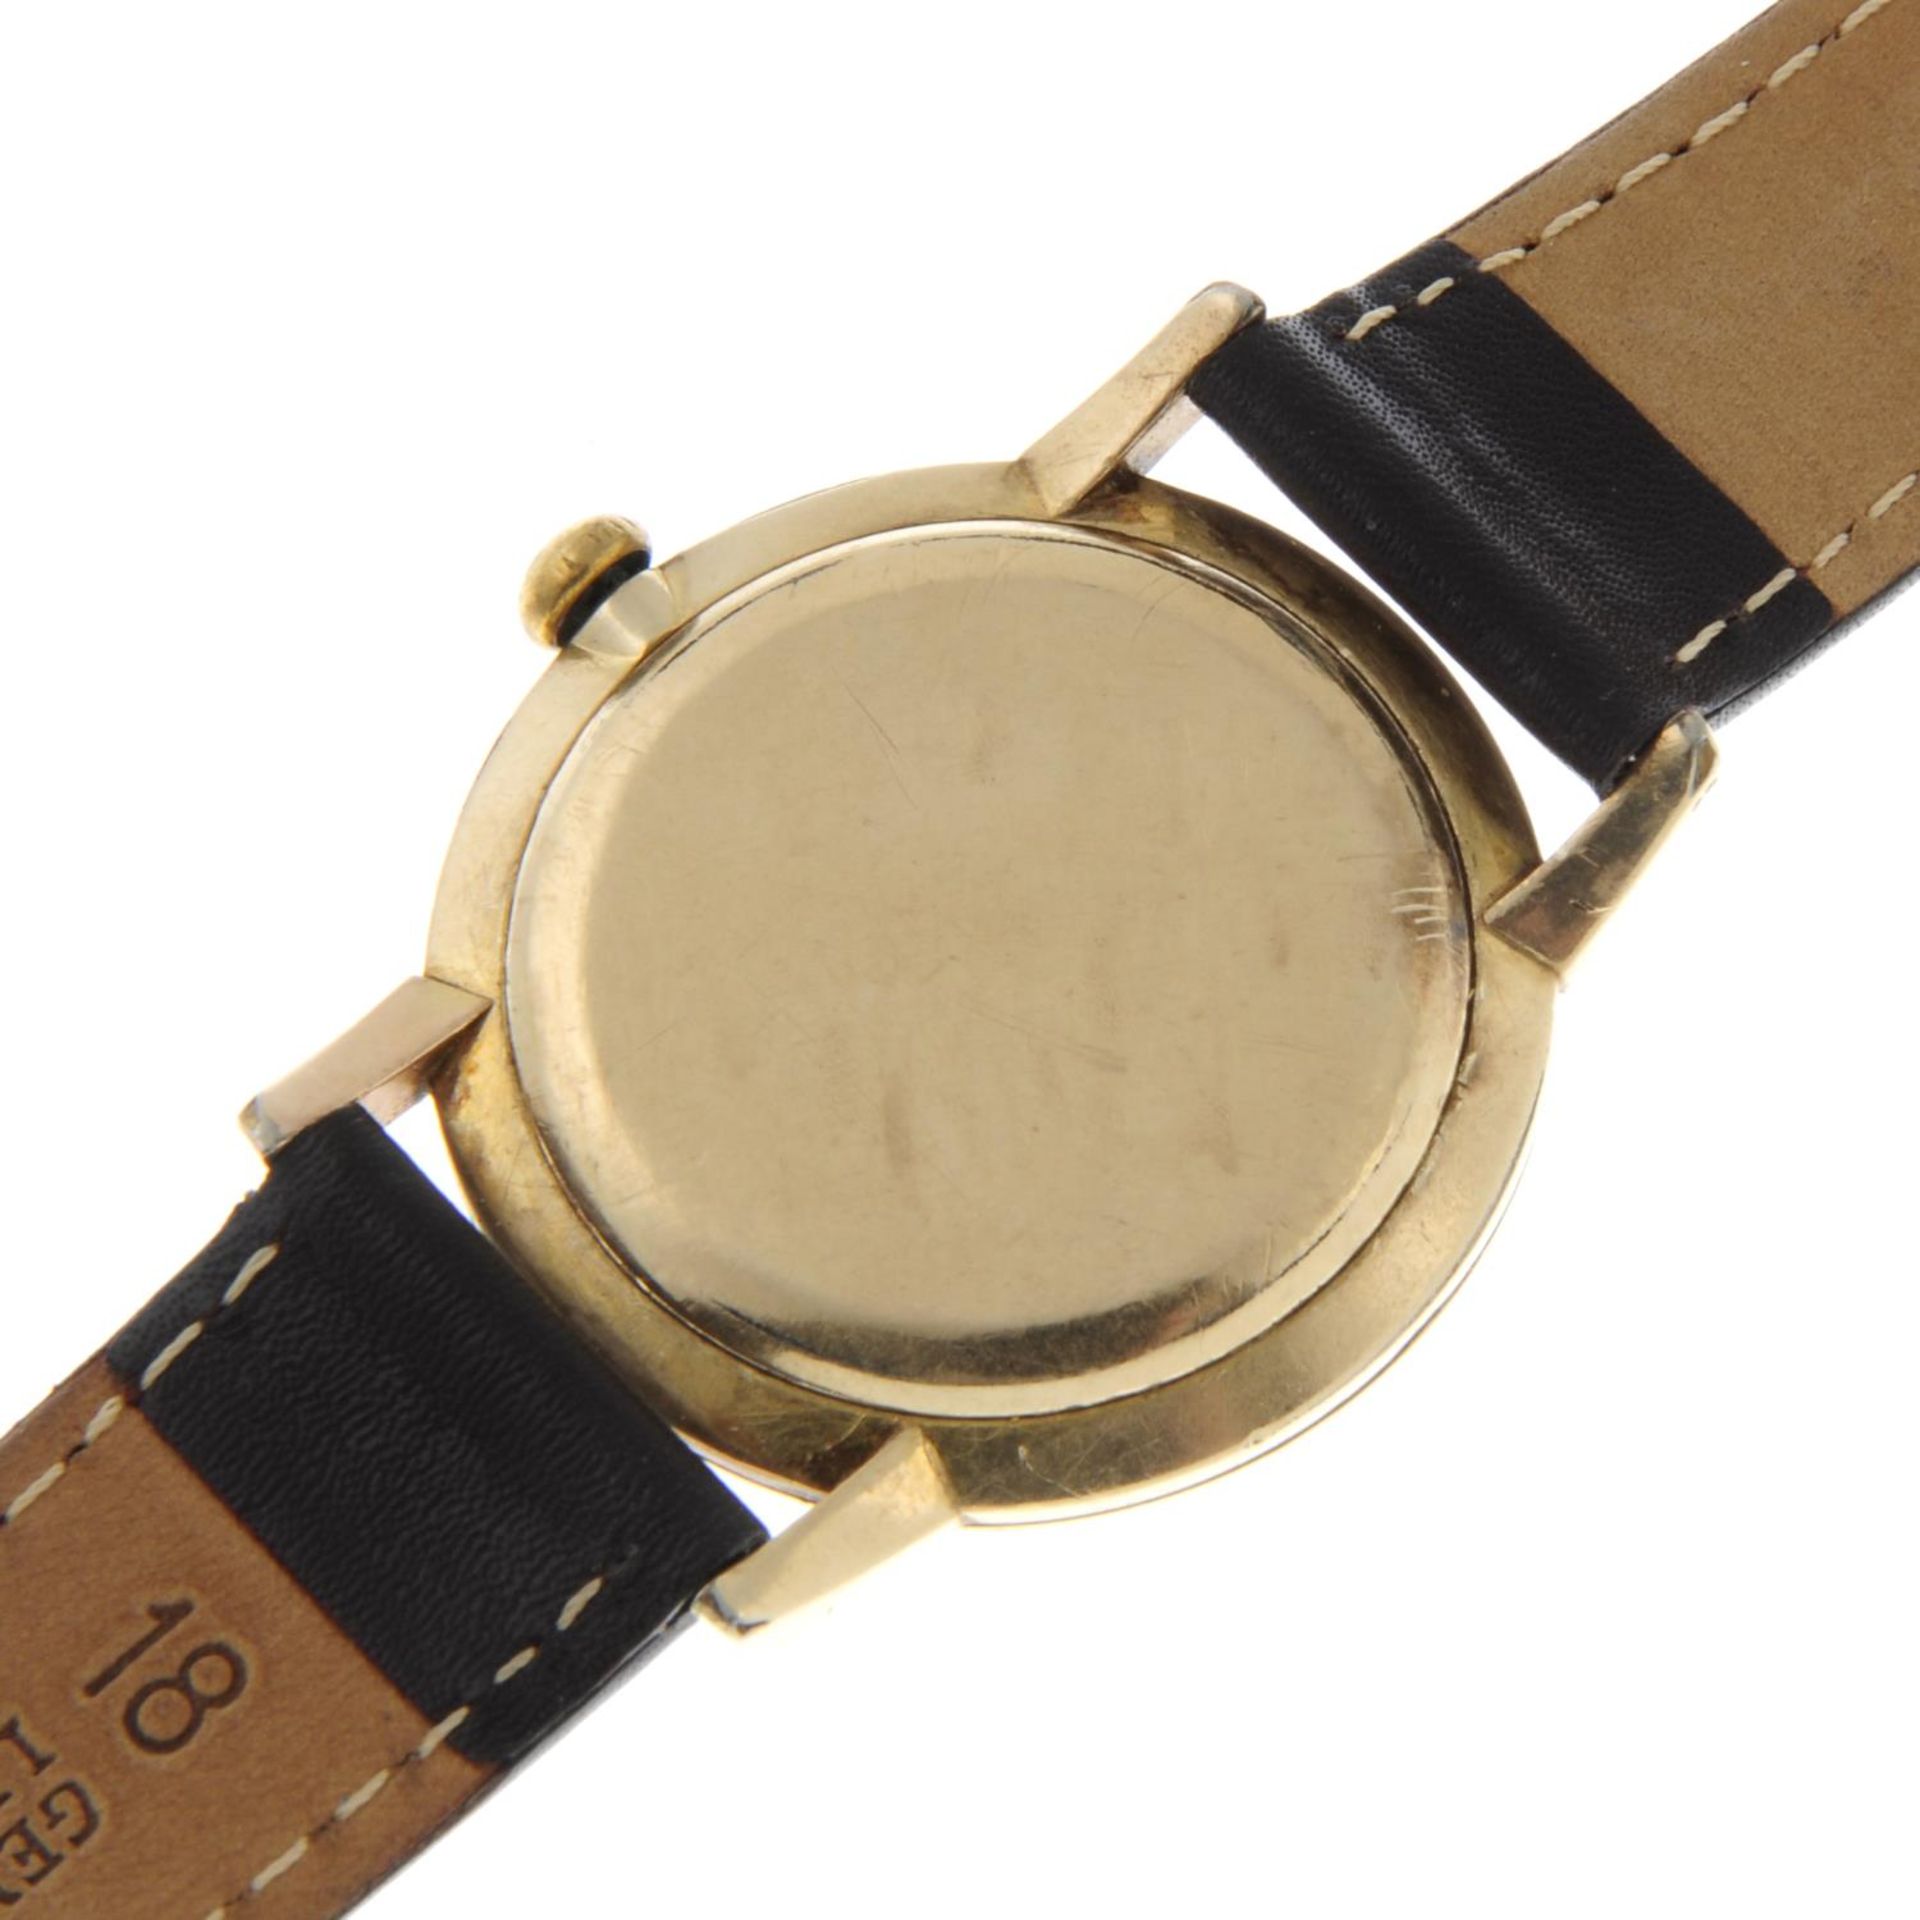 OMEGA - a wrist watch. - Image 4 of 4